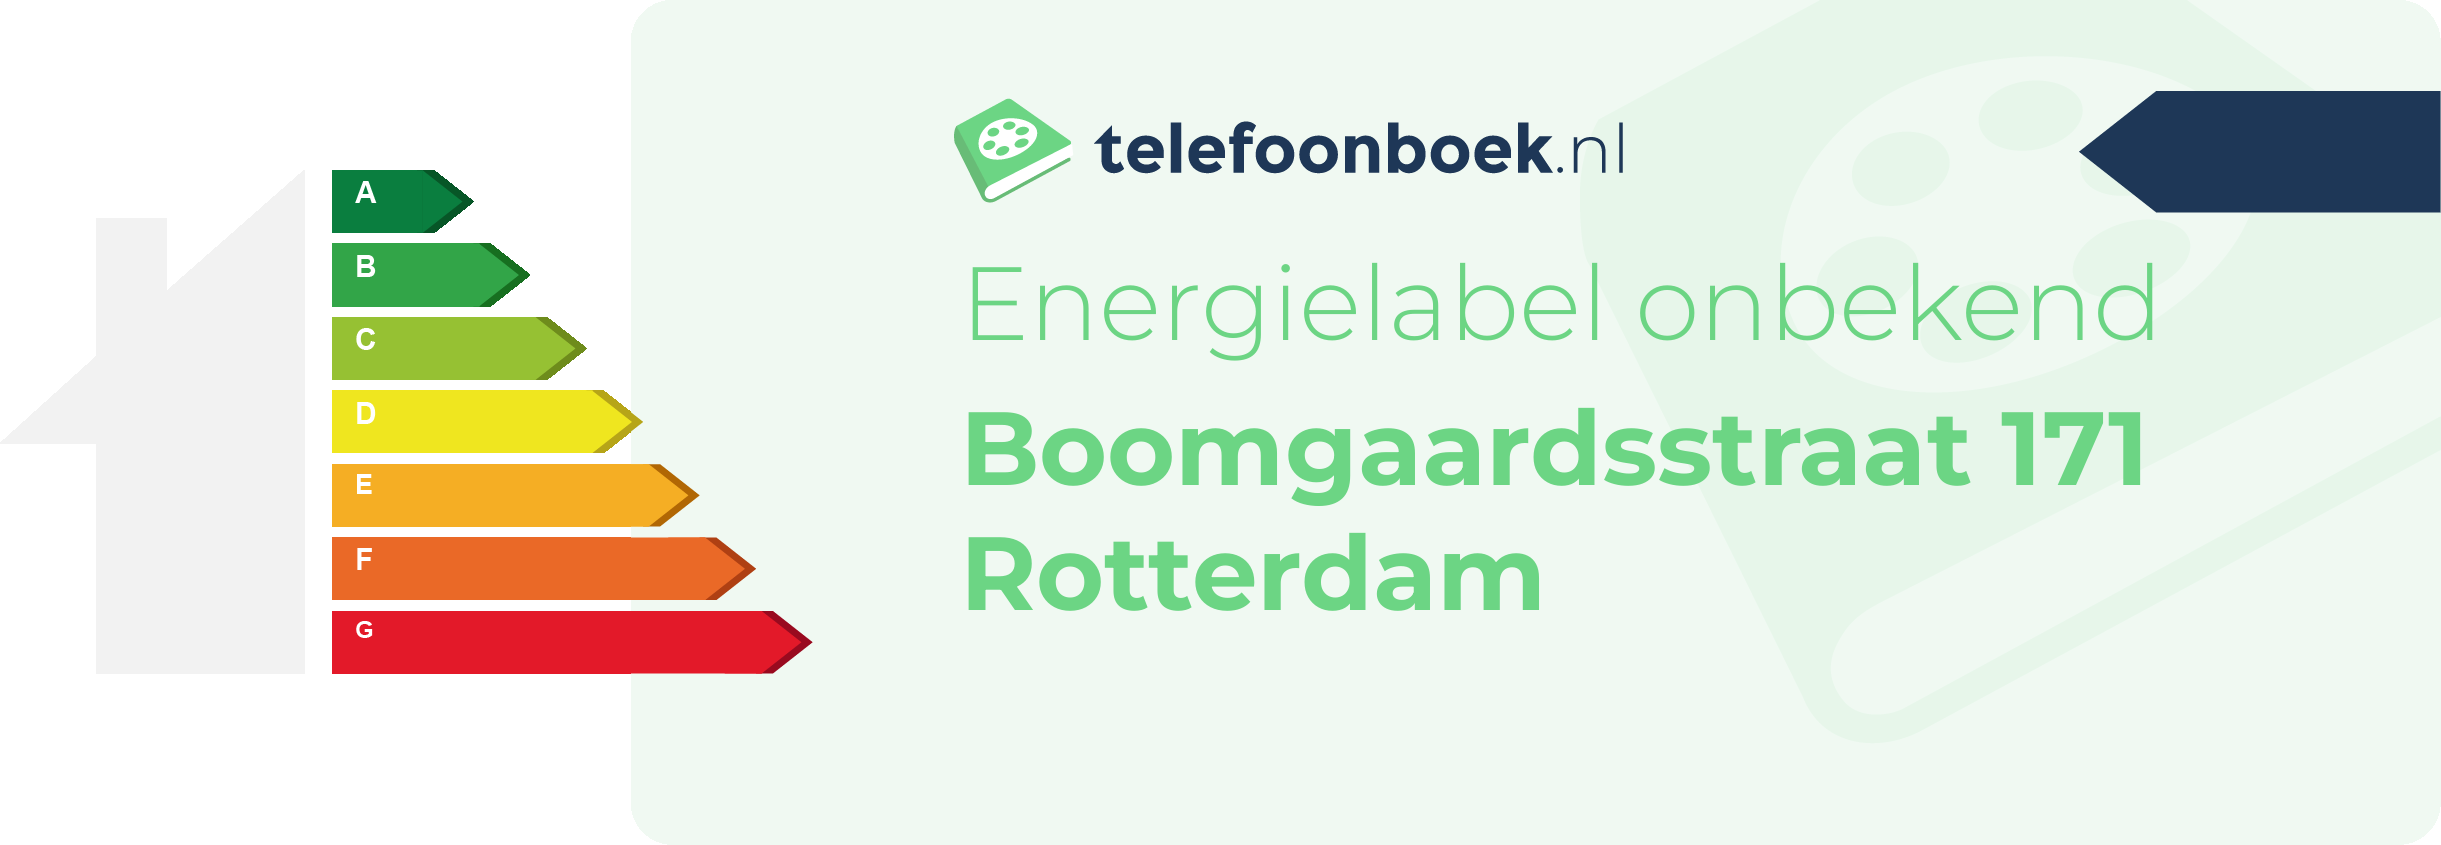 Energielabel Boomgaardsstraat 171 Rotterdam